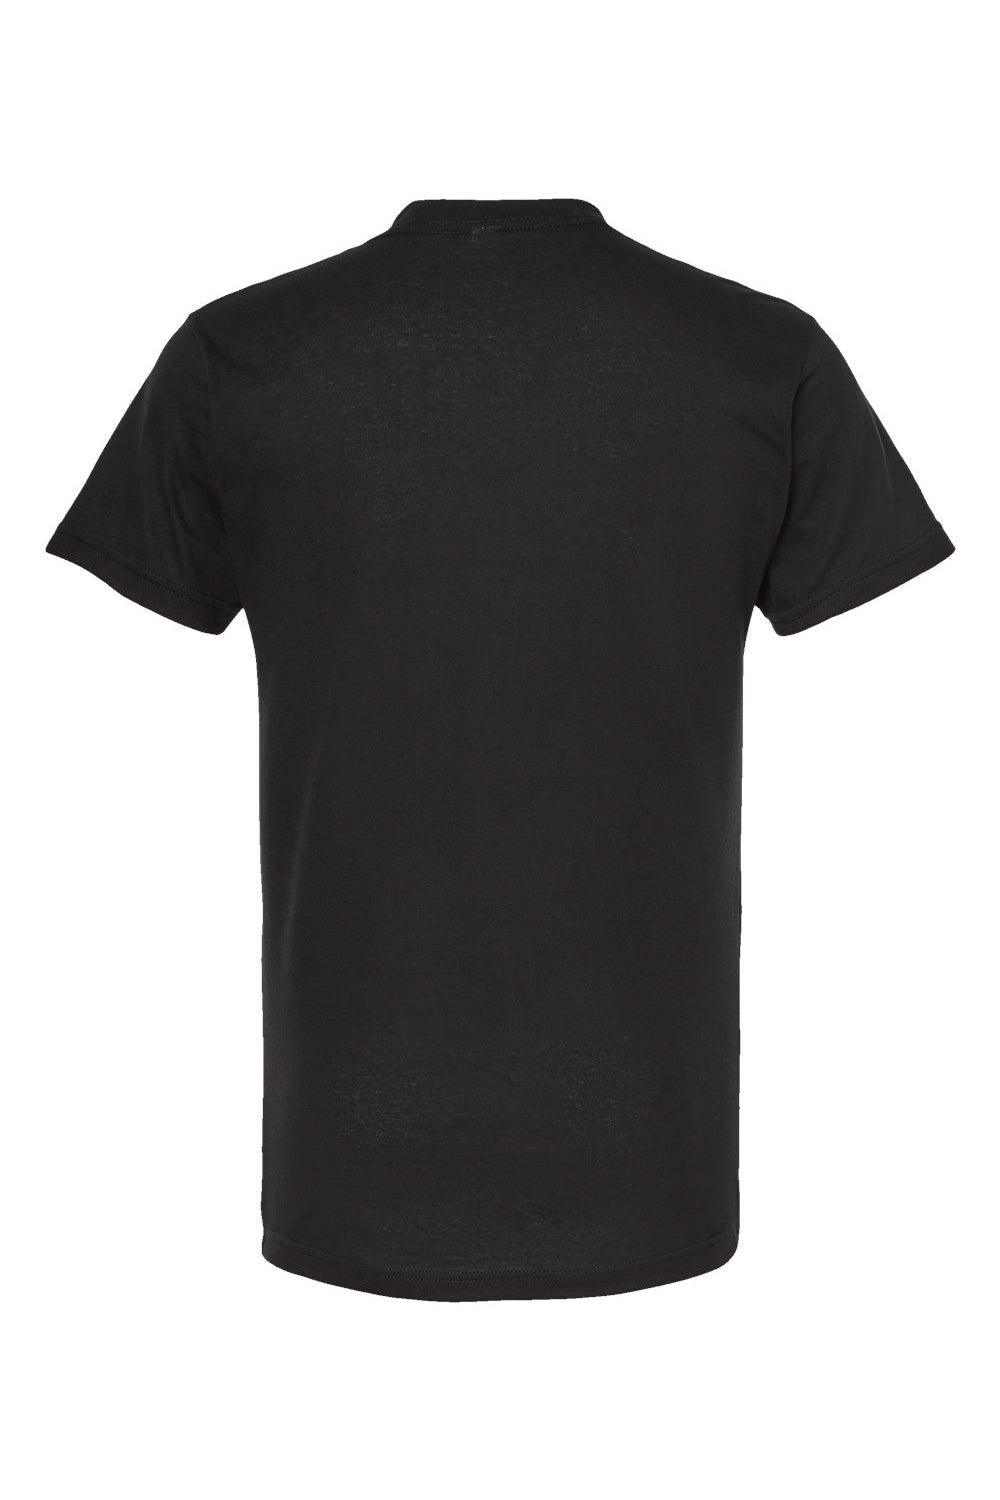 Tultex 207 Mens Poly-Rich Short Sleeve V-Neck T-Shirt Black Flat Back